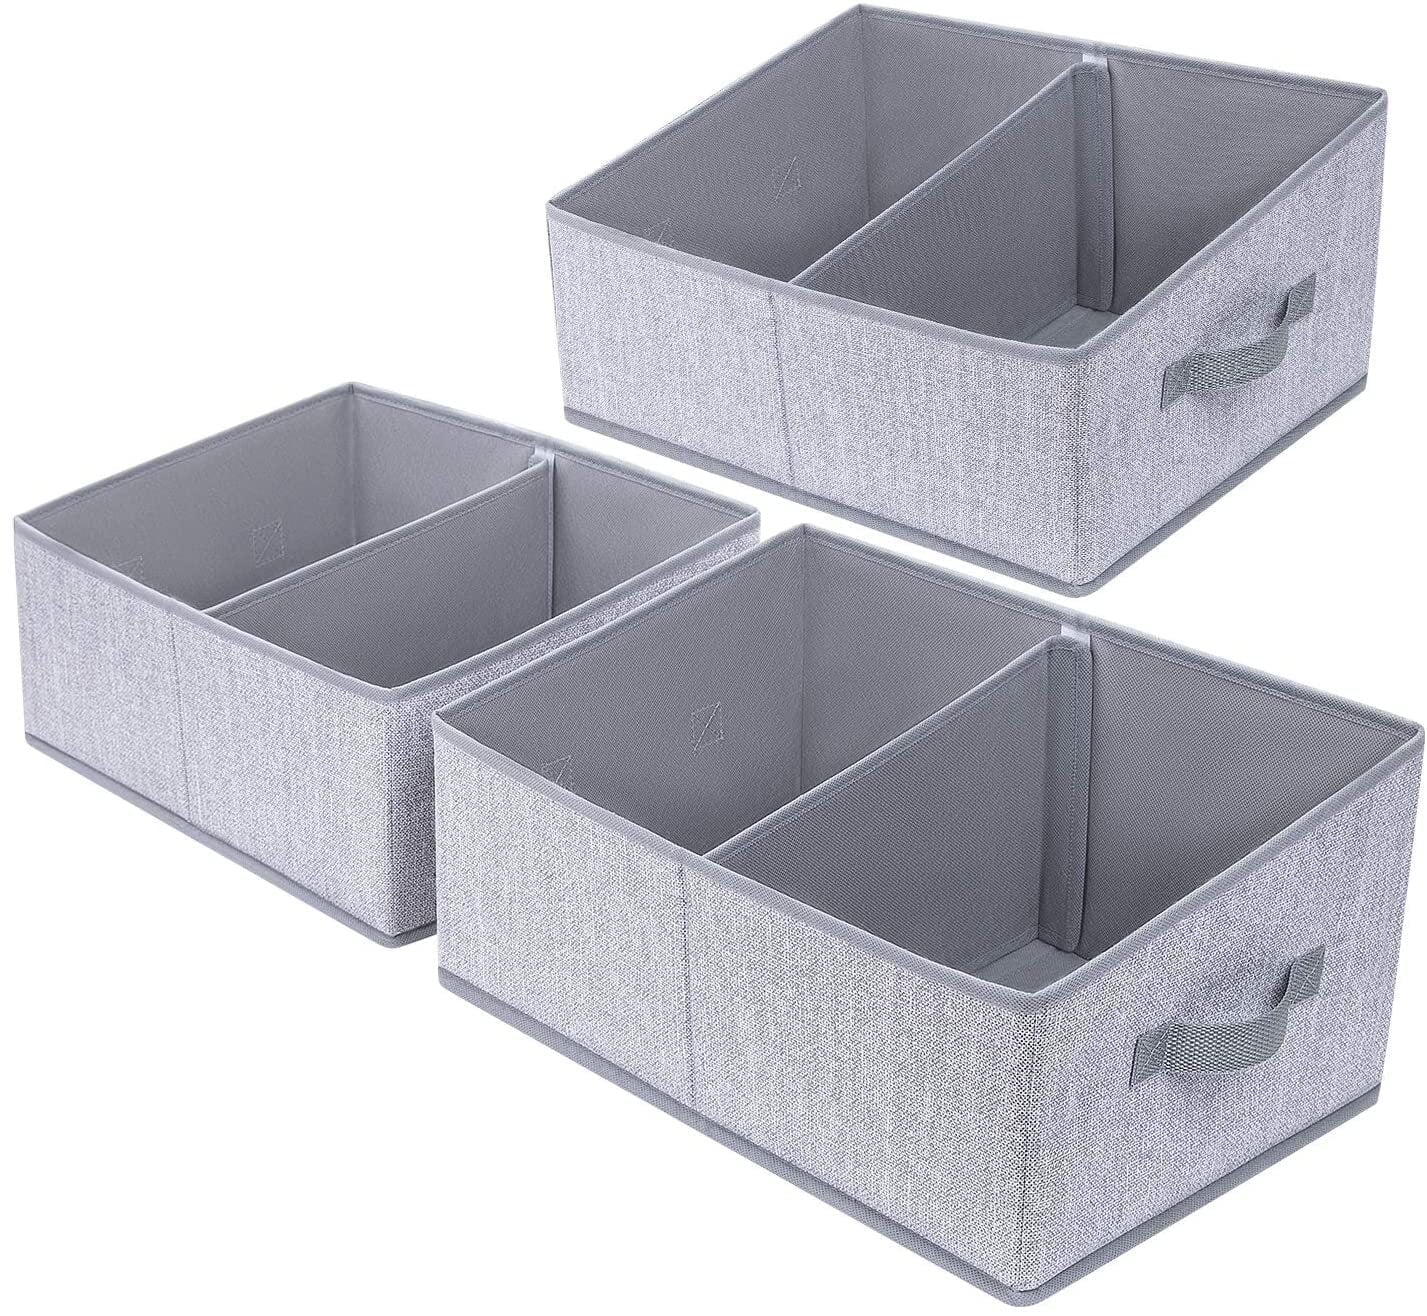 DIMJ Storage Bins, 6 Pcs Trapezoid Closet Storage Baskets for Shelves  Fabric Storage Box, Open Storage Cubes for Clothes Jeans Books Toys Office  Bathroom Home Organization, Stripe 